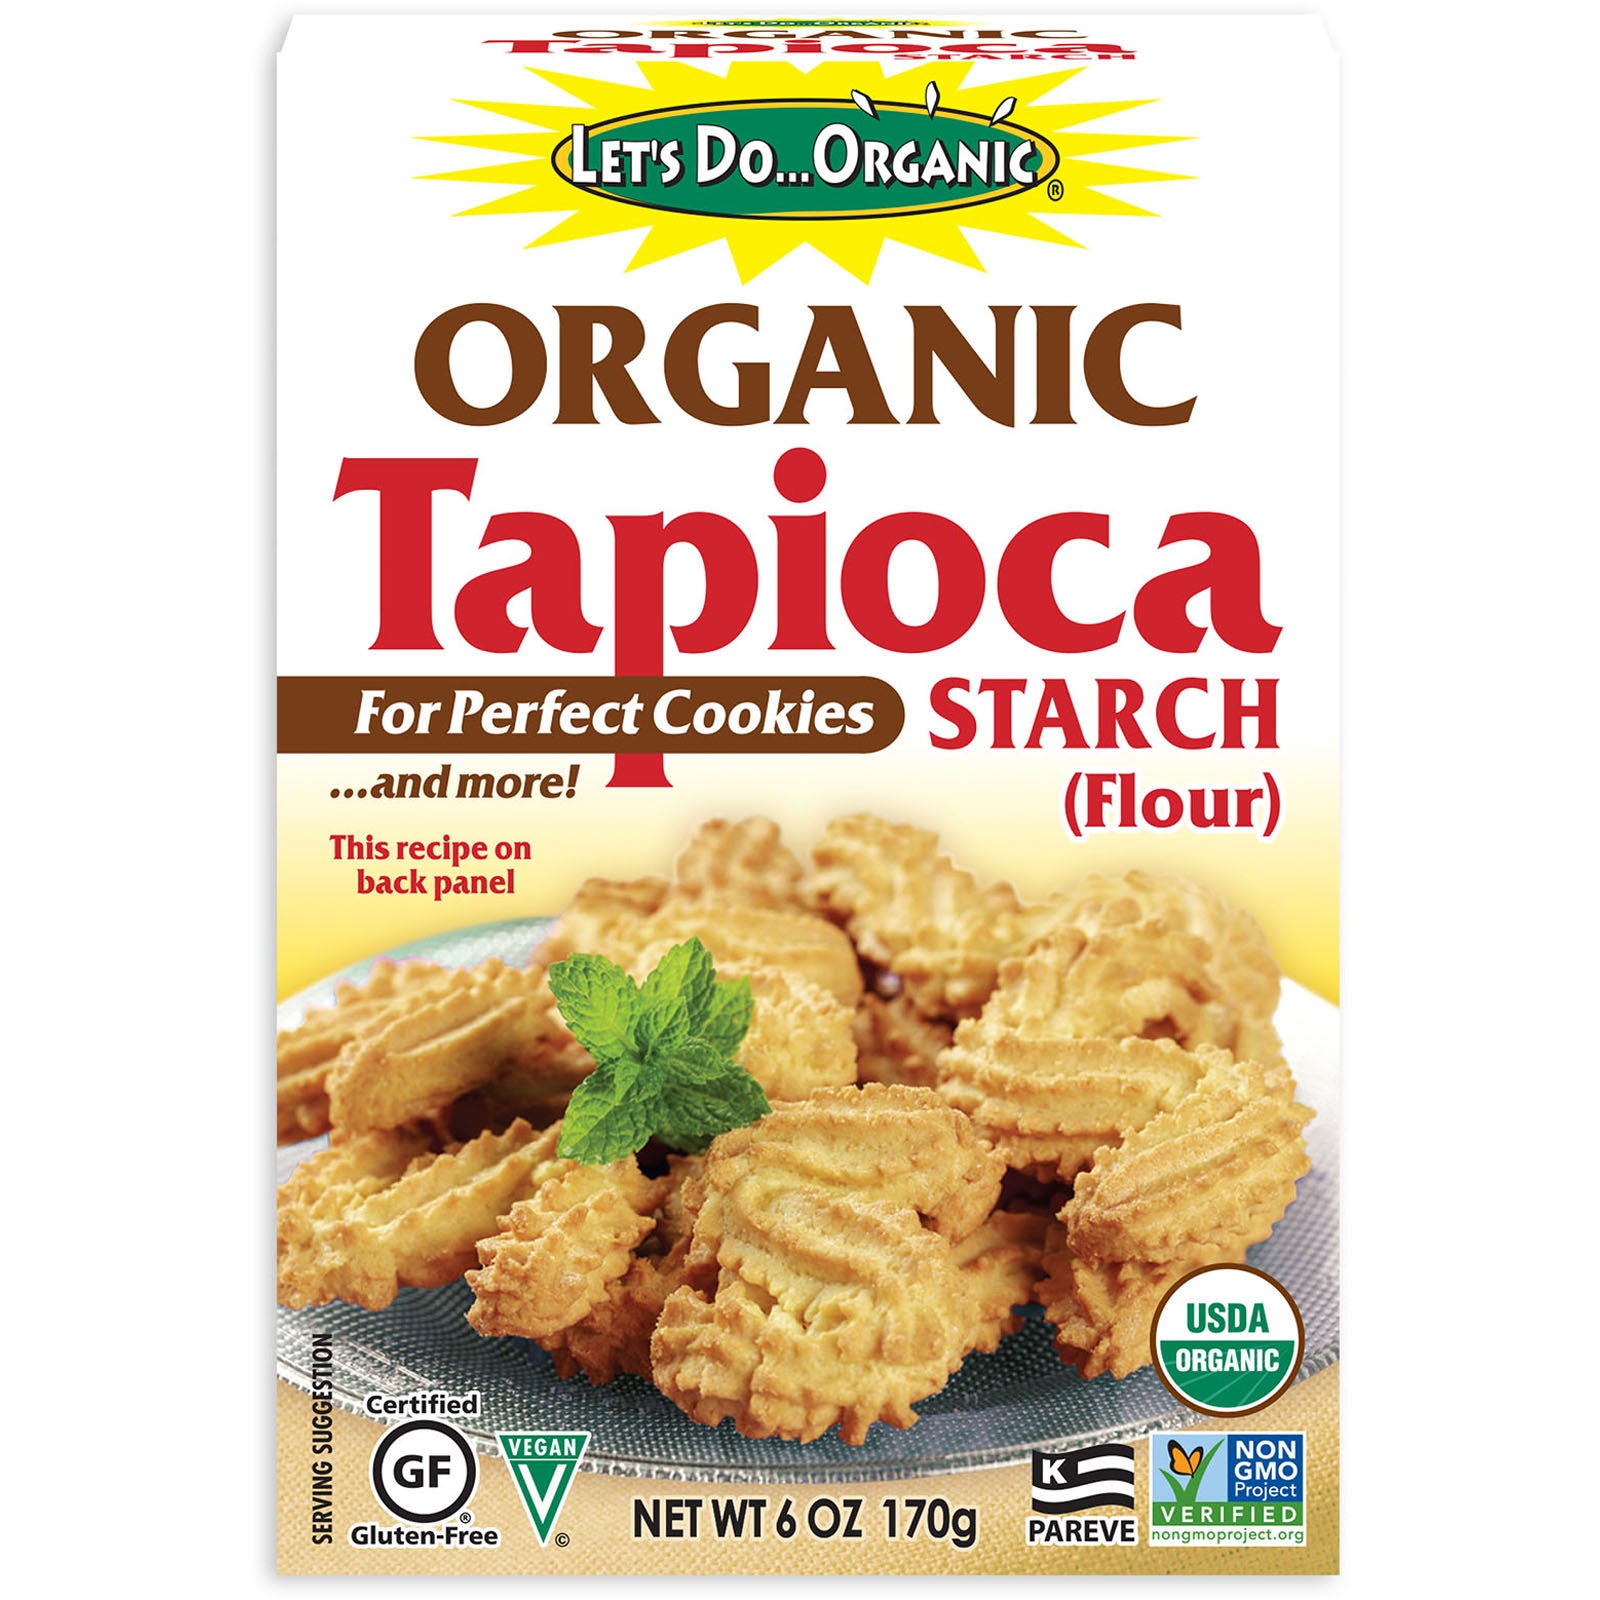 Let's Do Organic Tapioca Starch Flour 170g